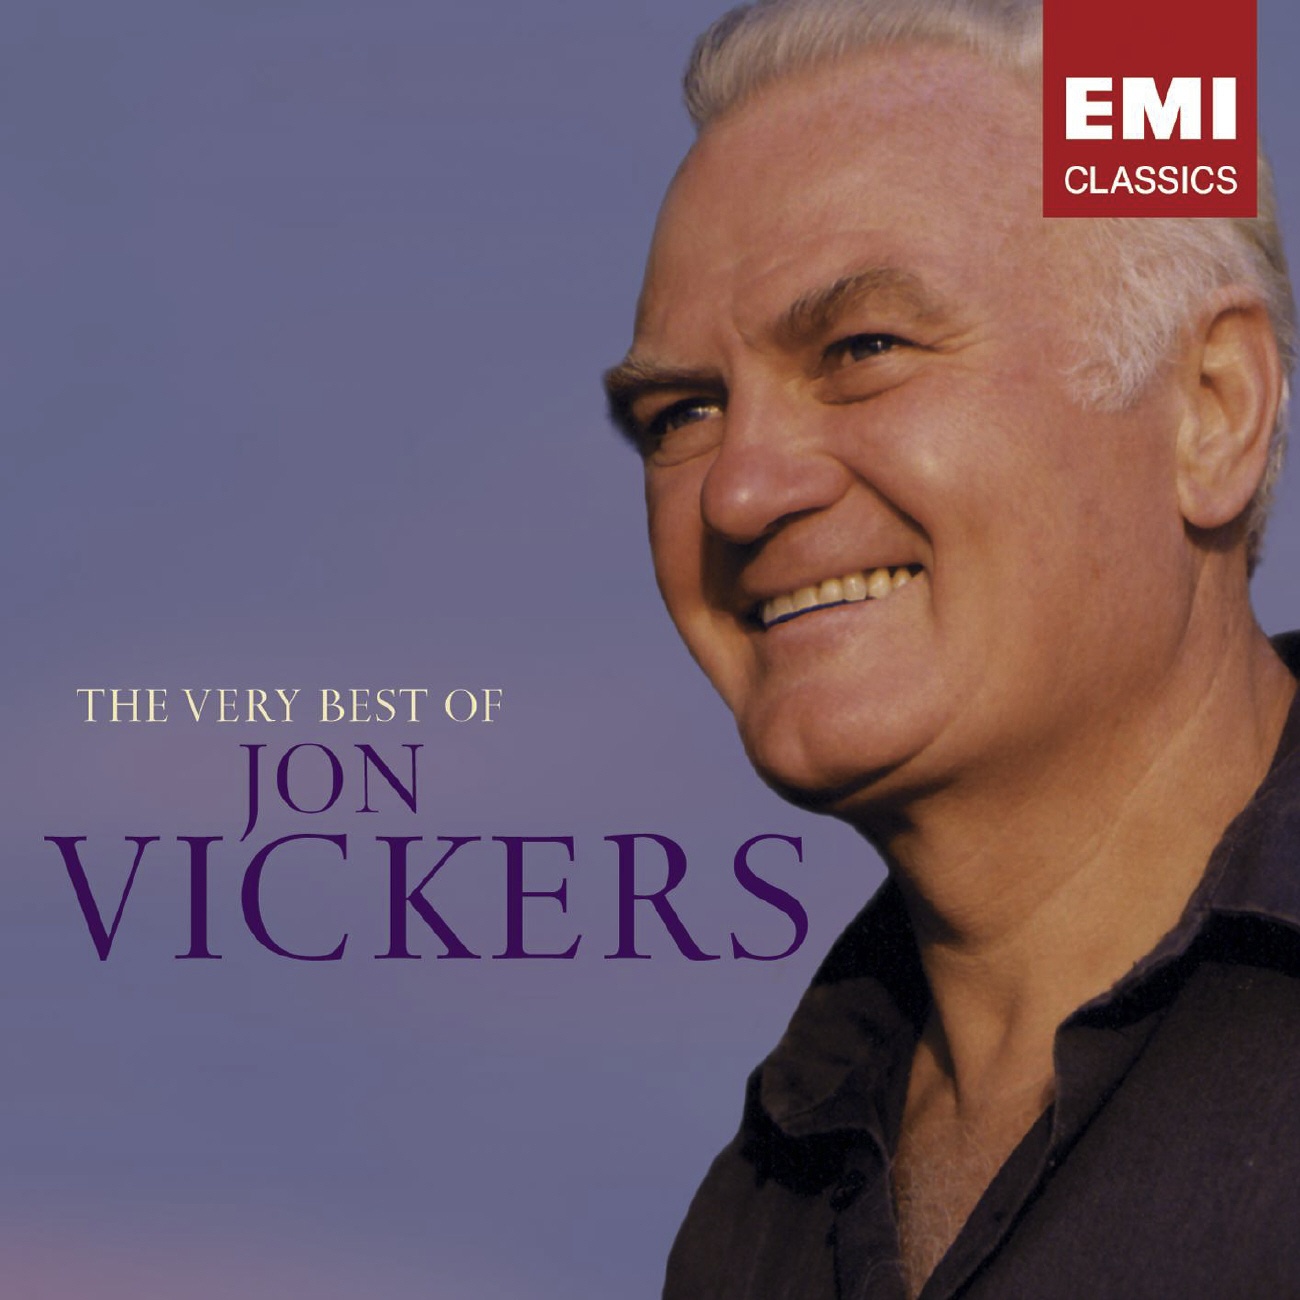 The Very Best of Jon Vickers